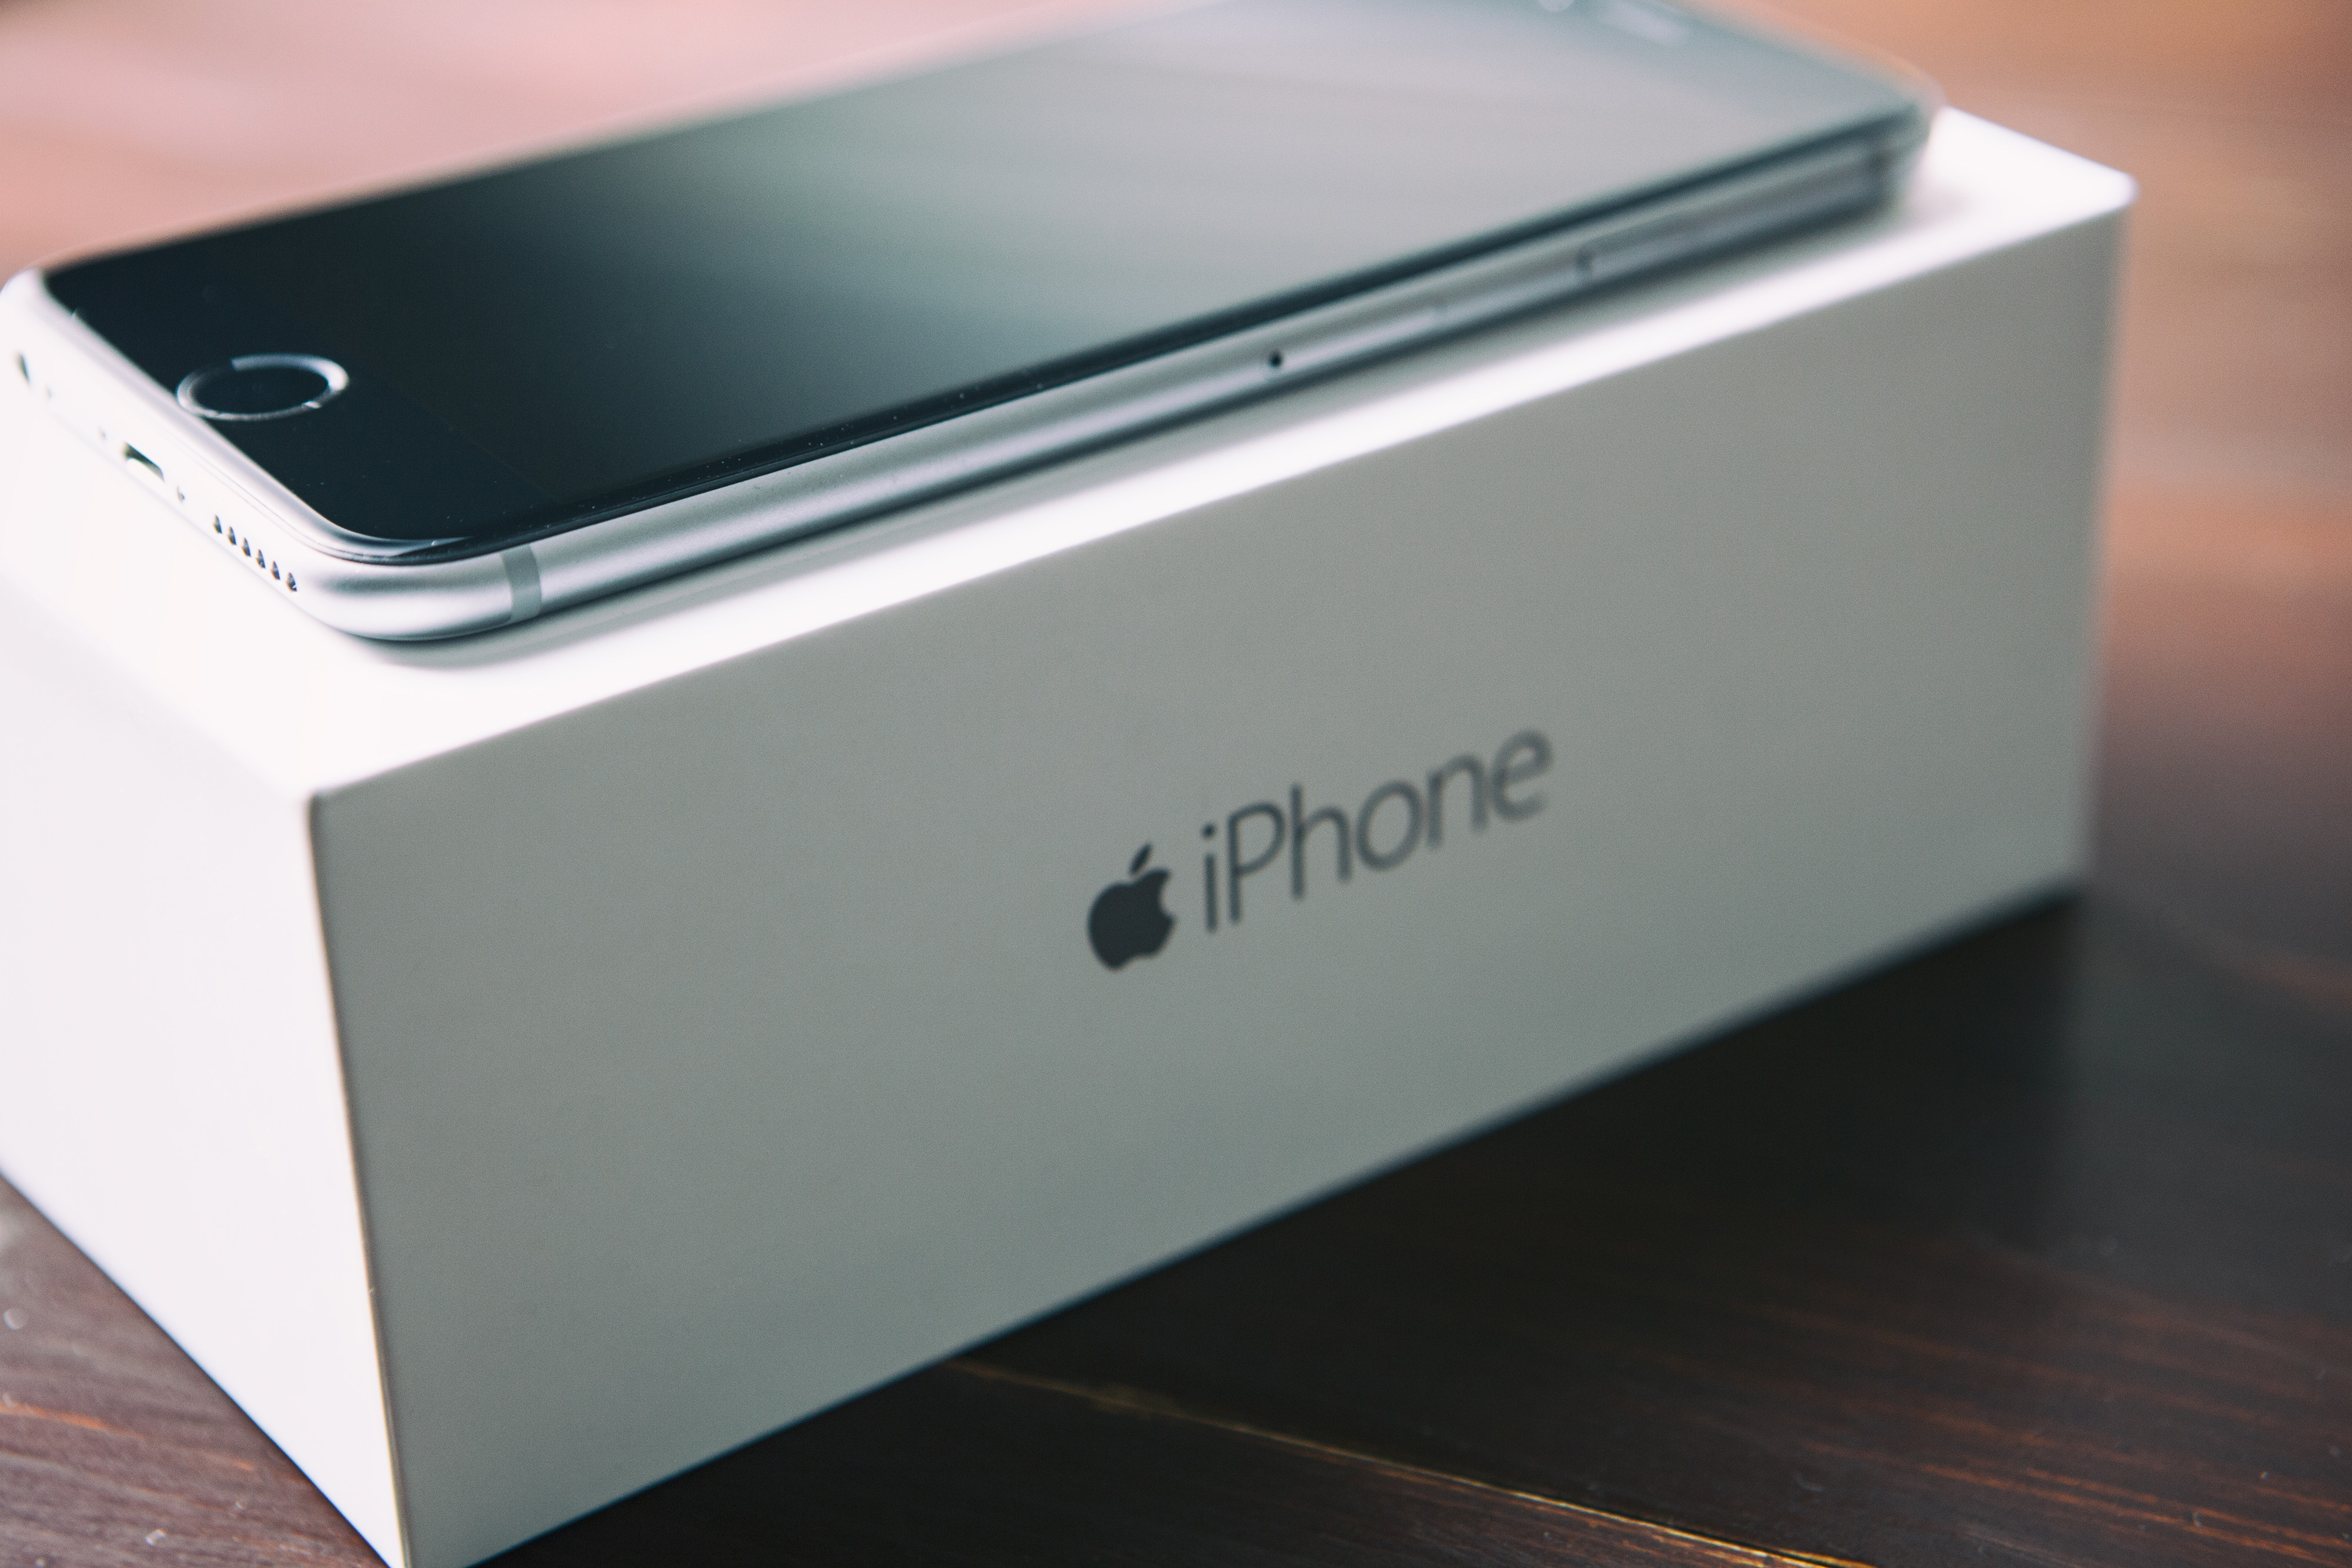 iphone 6 silver box